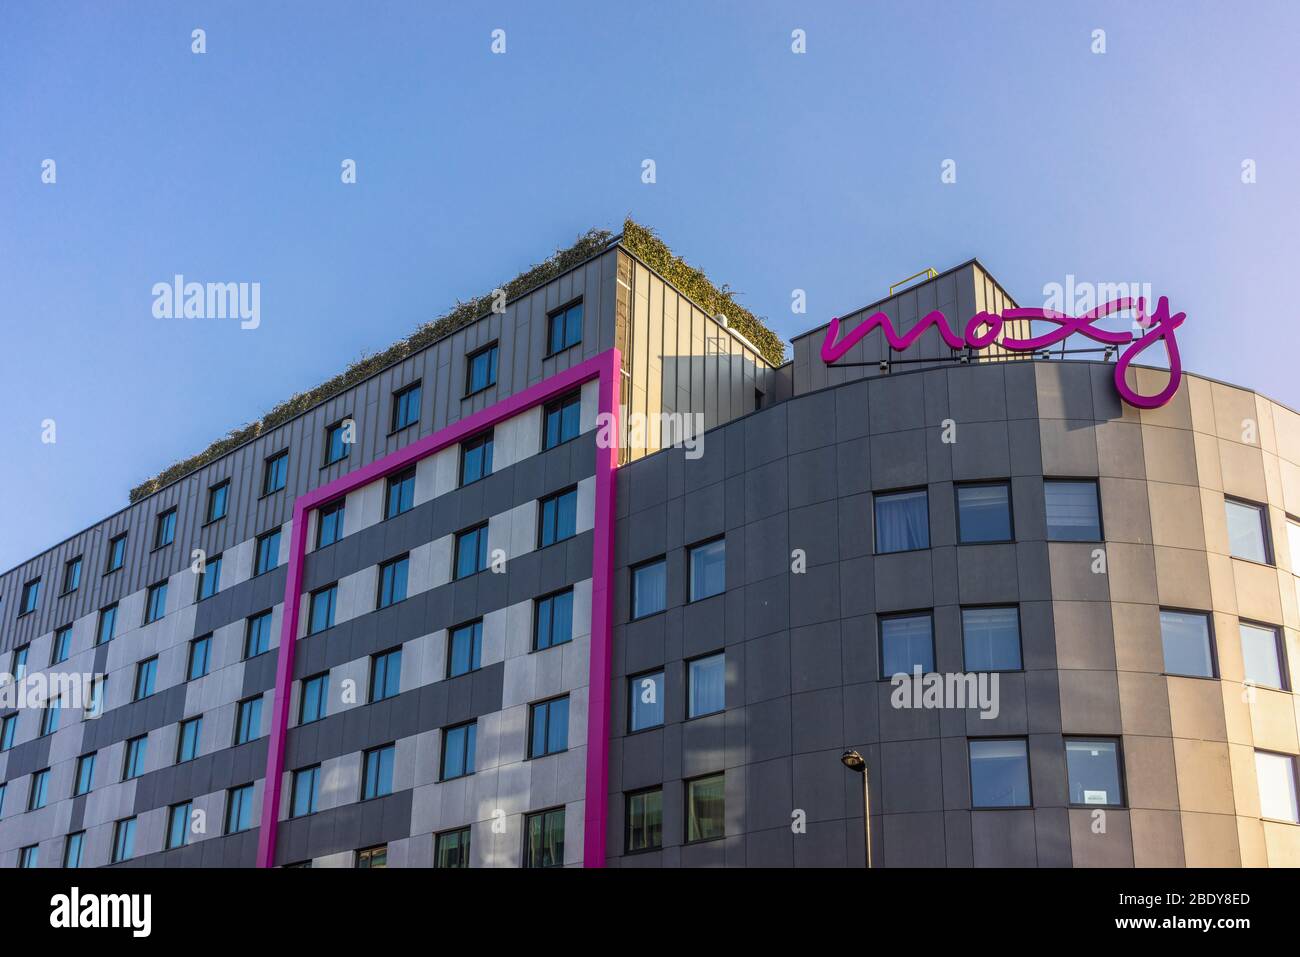 Facade of a Moxy budget hotel in Southampton, England, UK Stock Photo